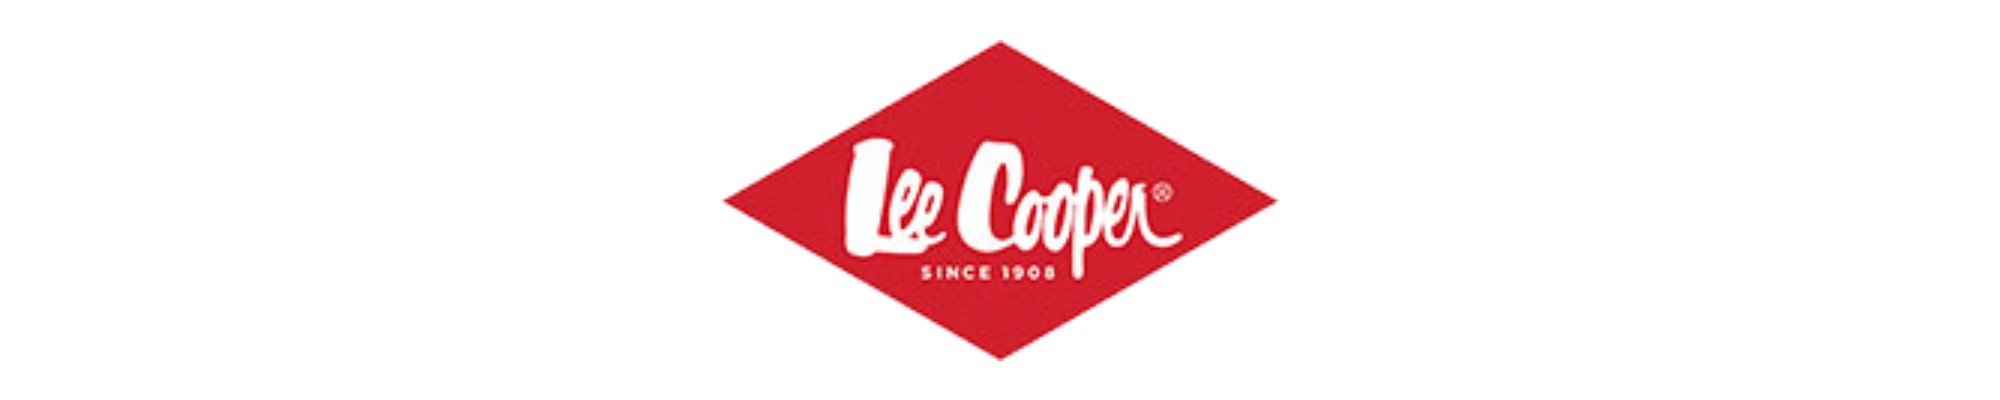 Clothing wholesaler children Lee Cooper